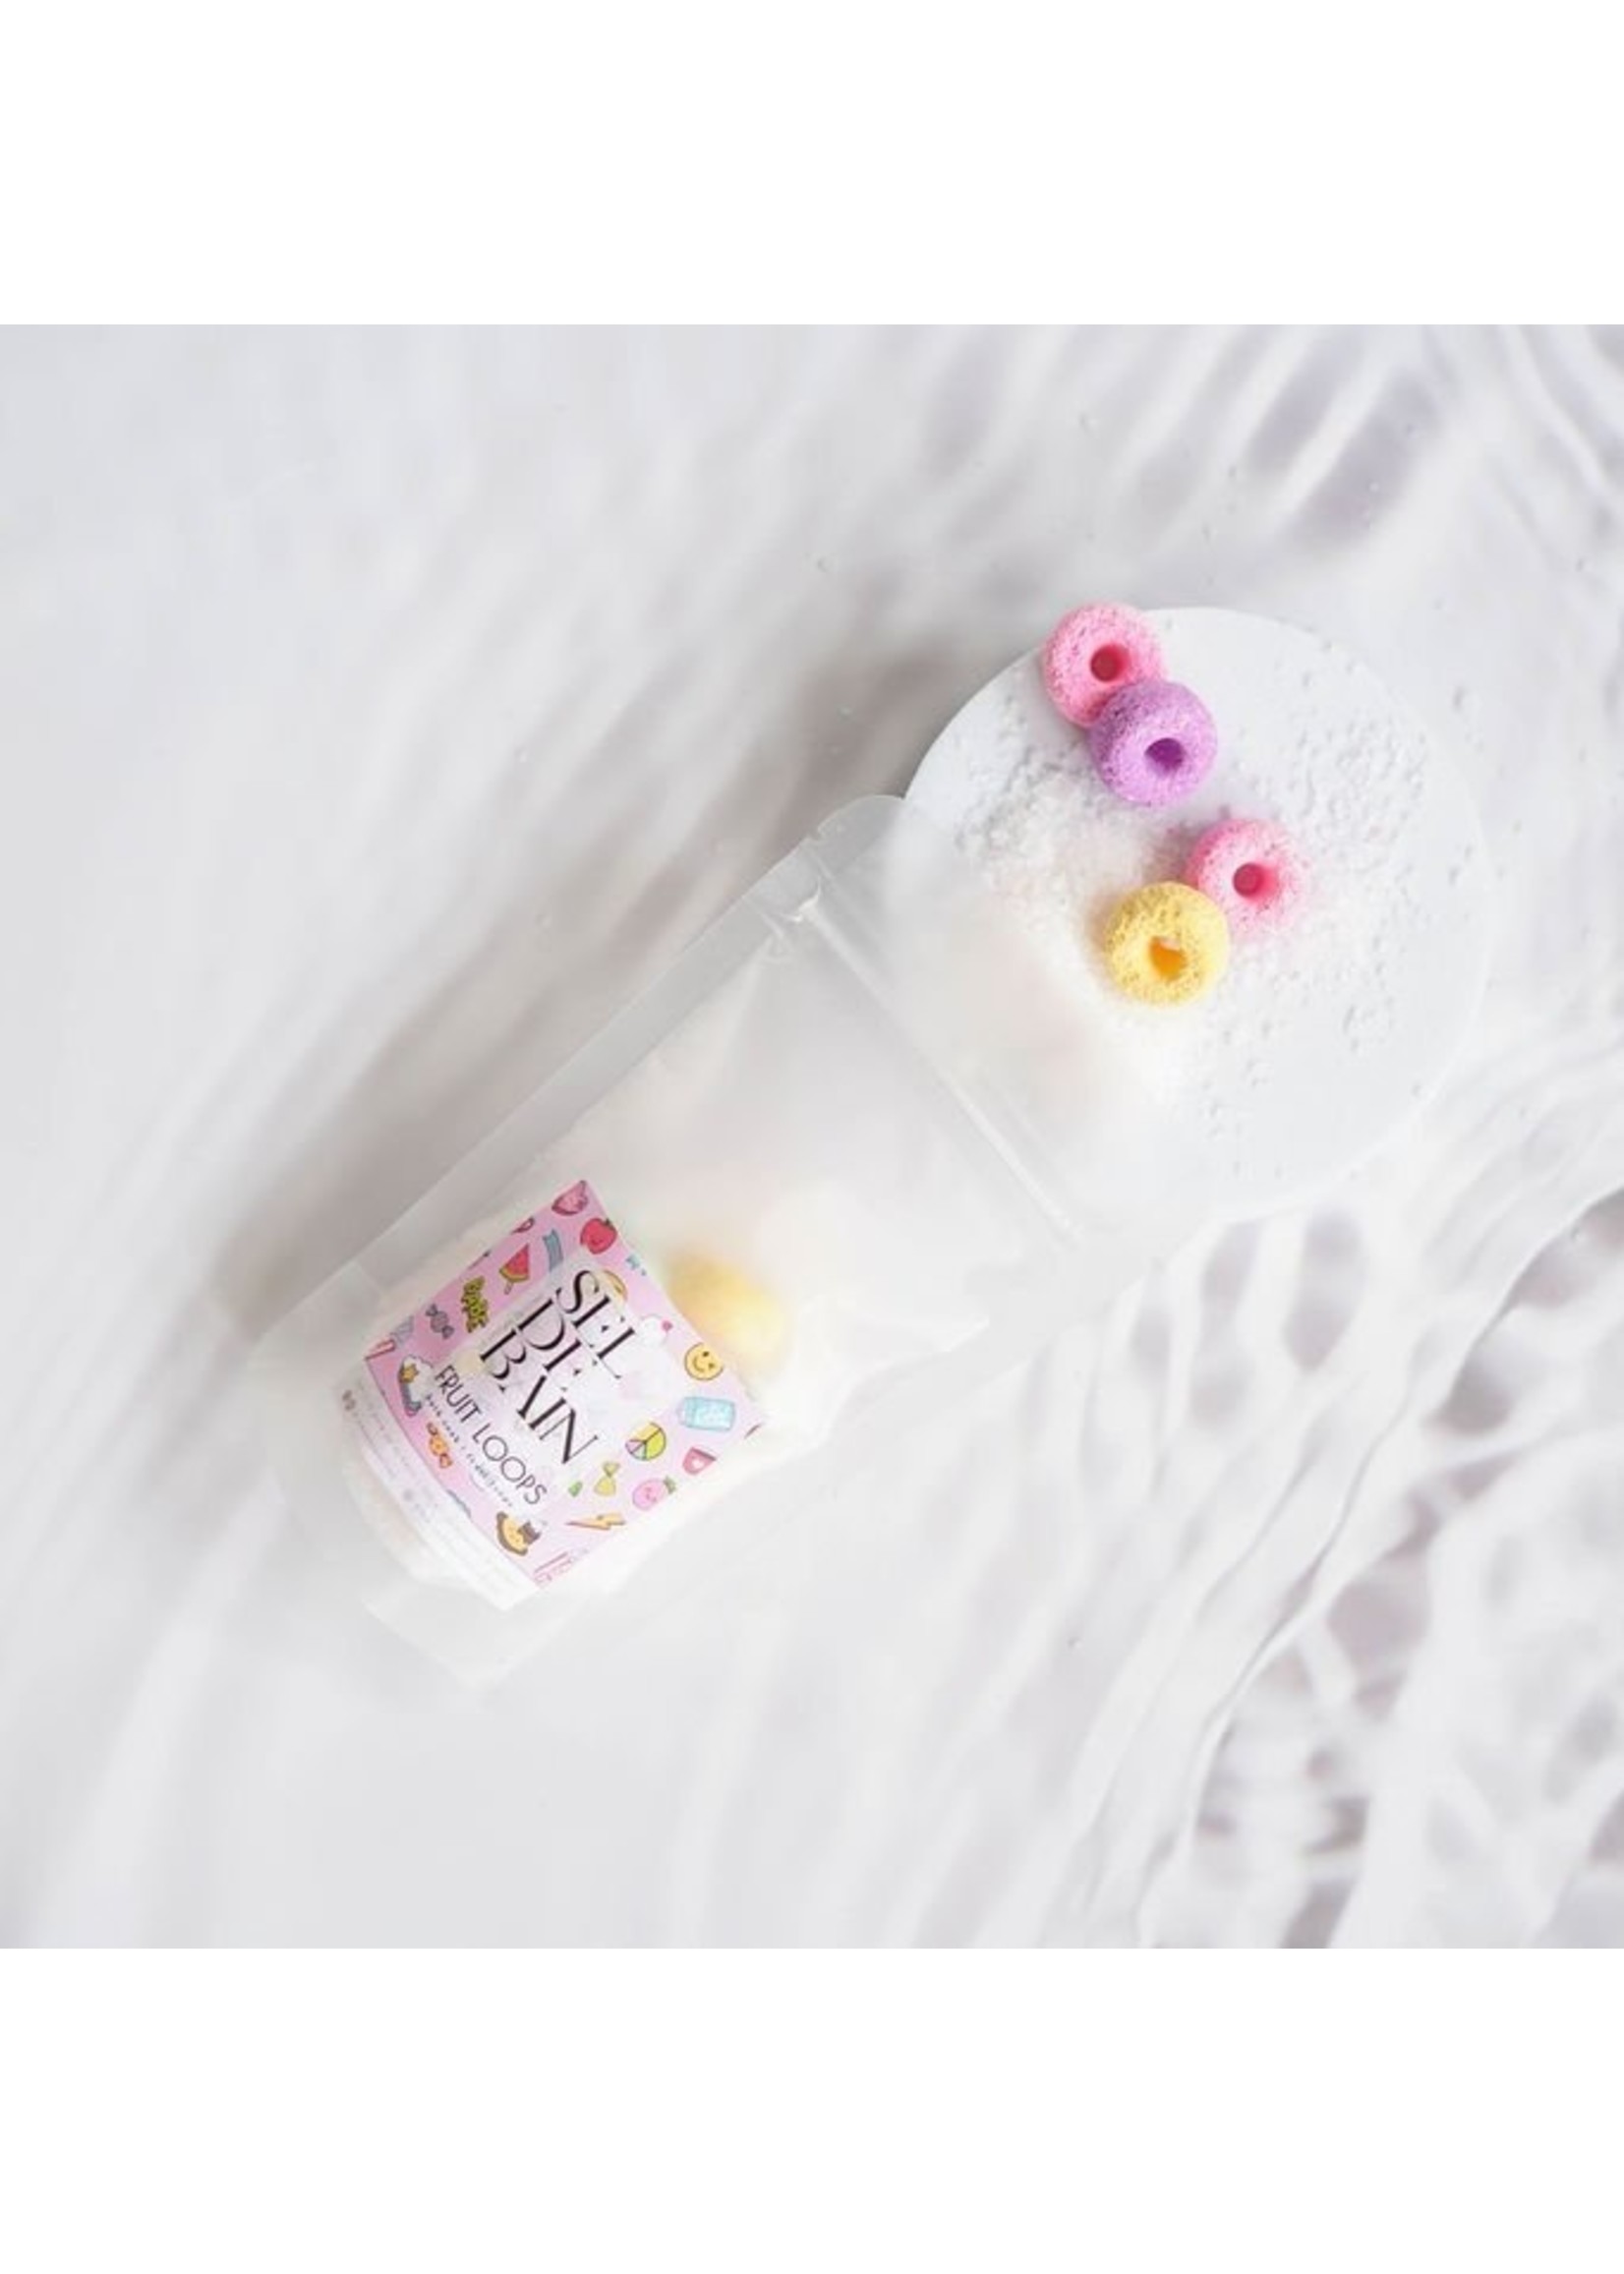 Le Monde de Cyno Enfant: Bubble gum : sel de bain + mini bombes  effervescentes